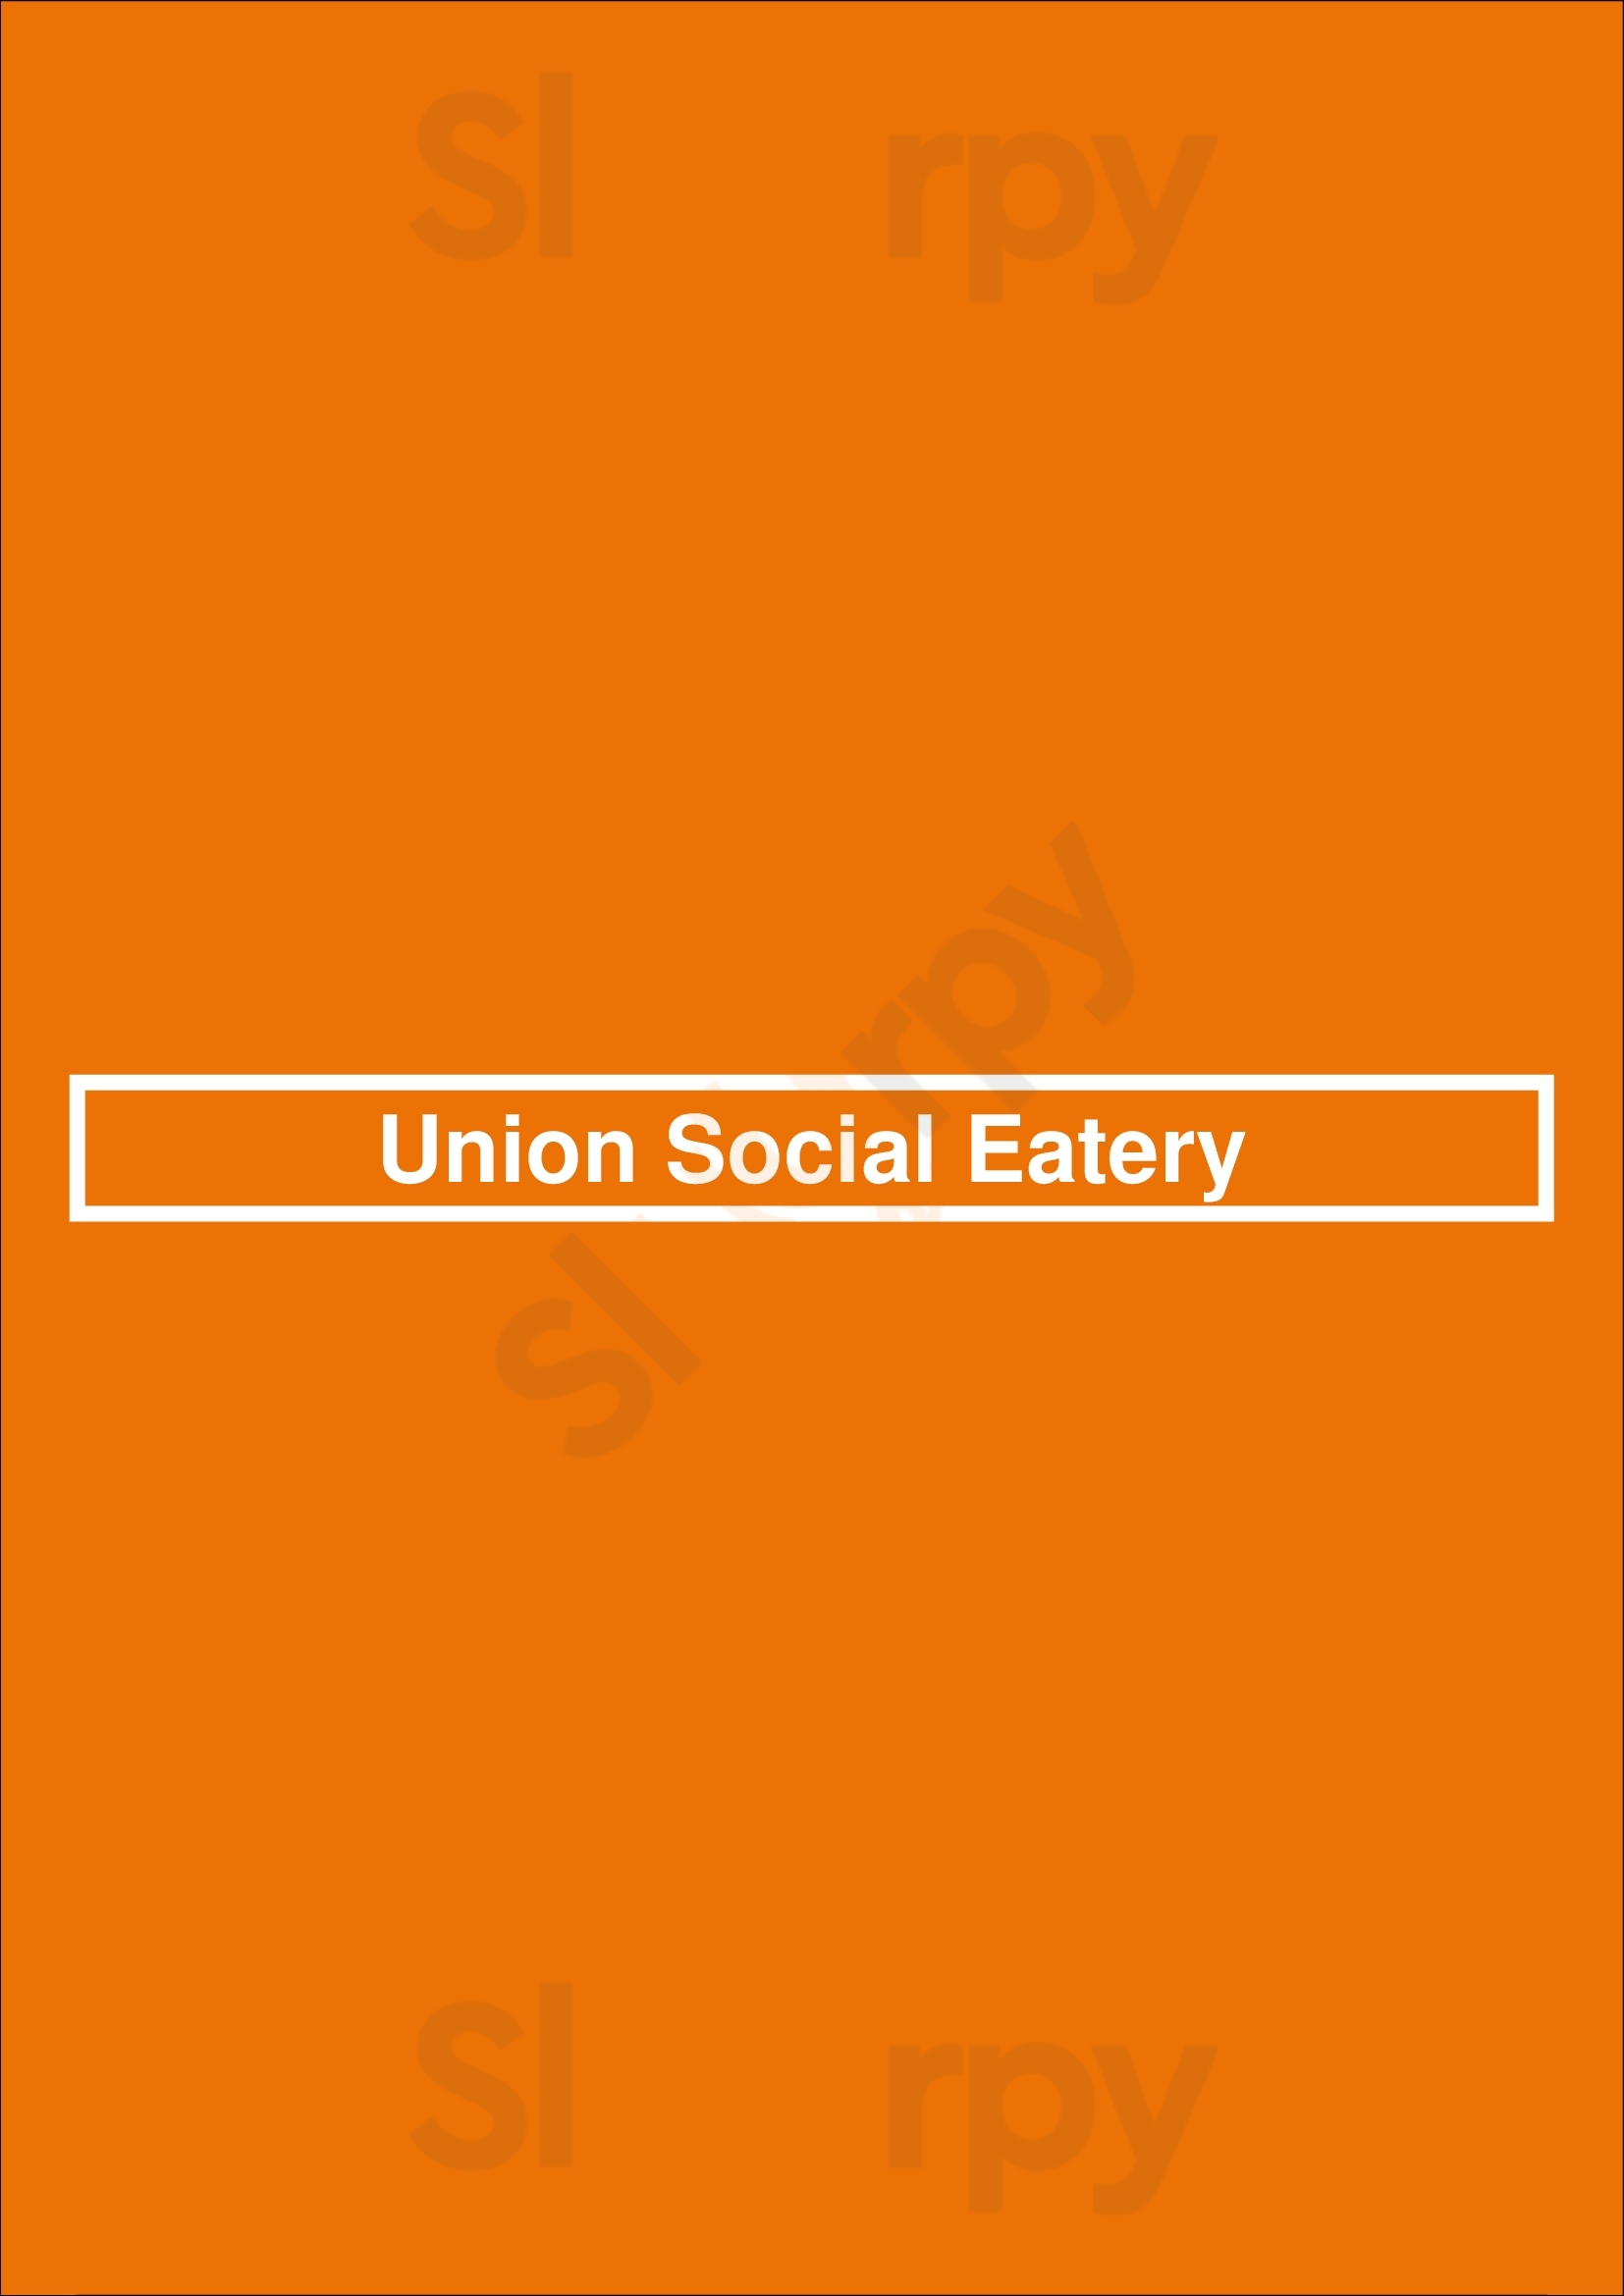 Union Social Eatery Mississauga Menu - 1